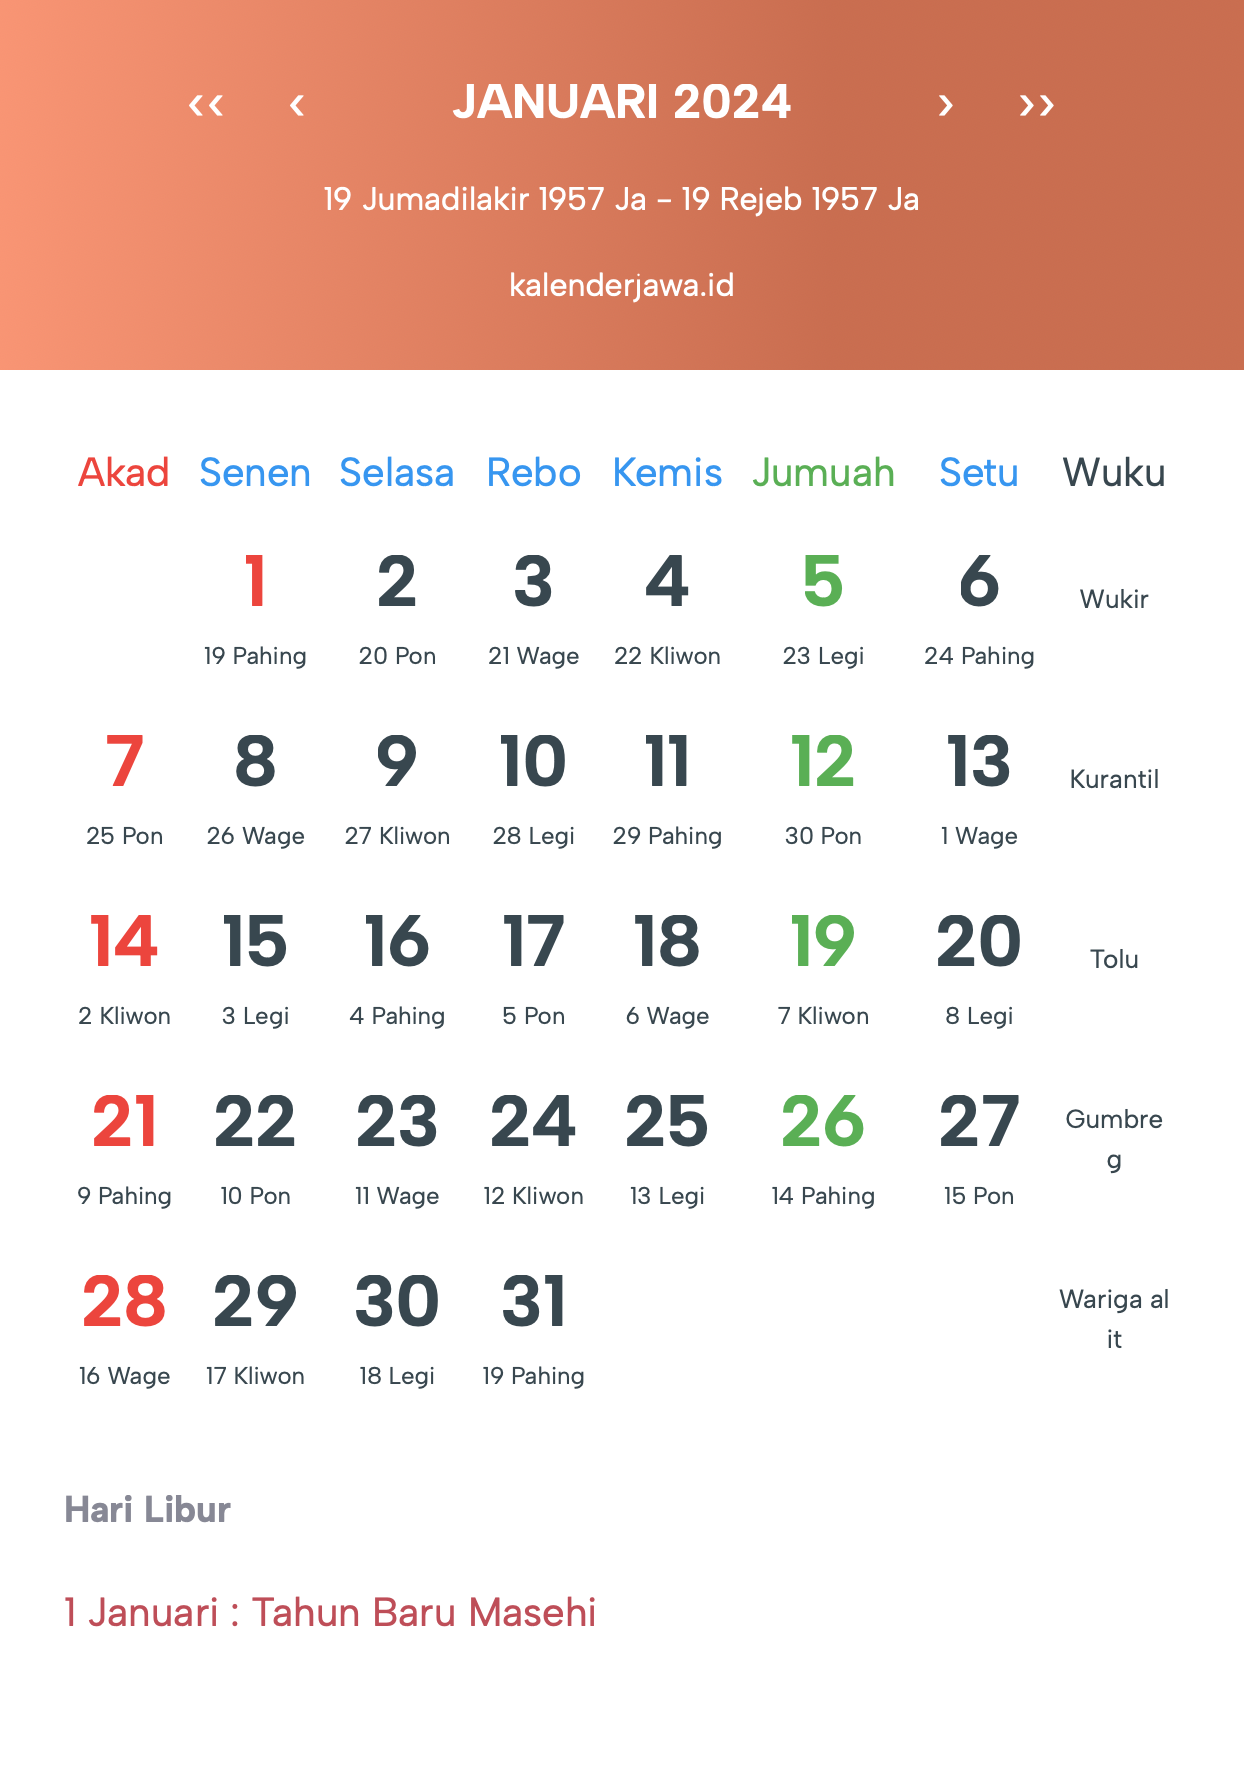 Gambar Kalender Jawa Januari 2024